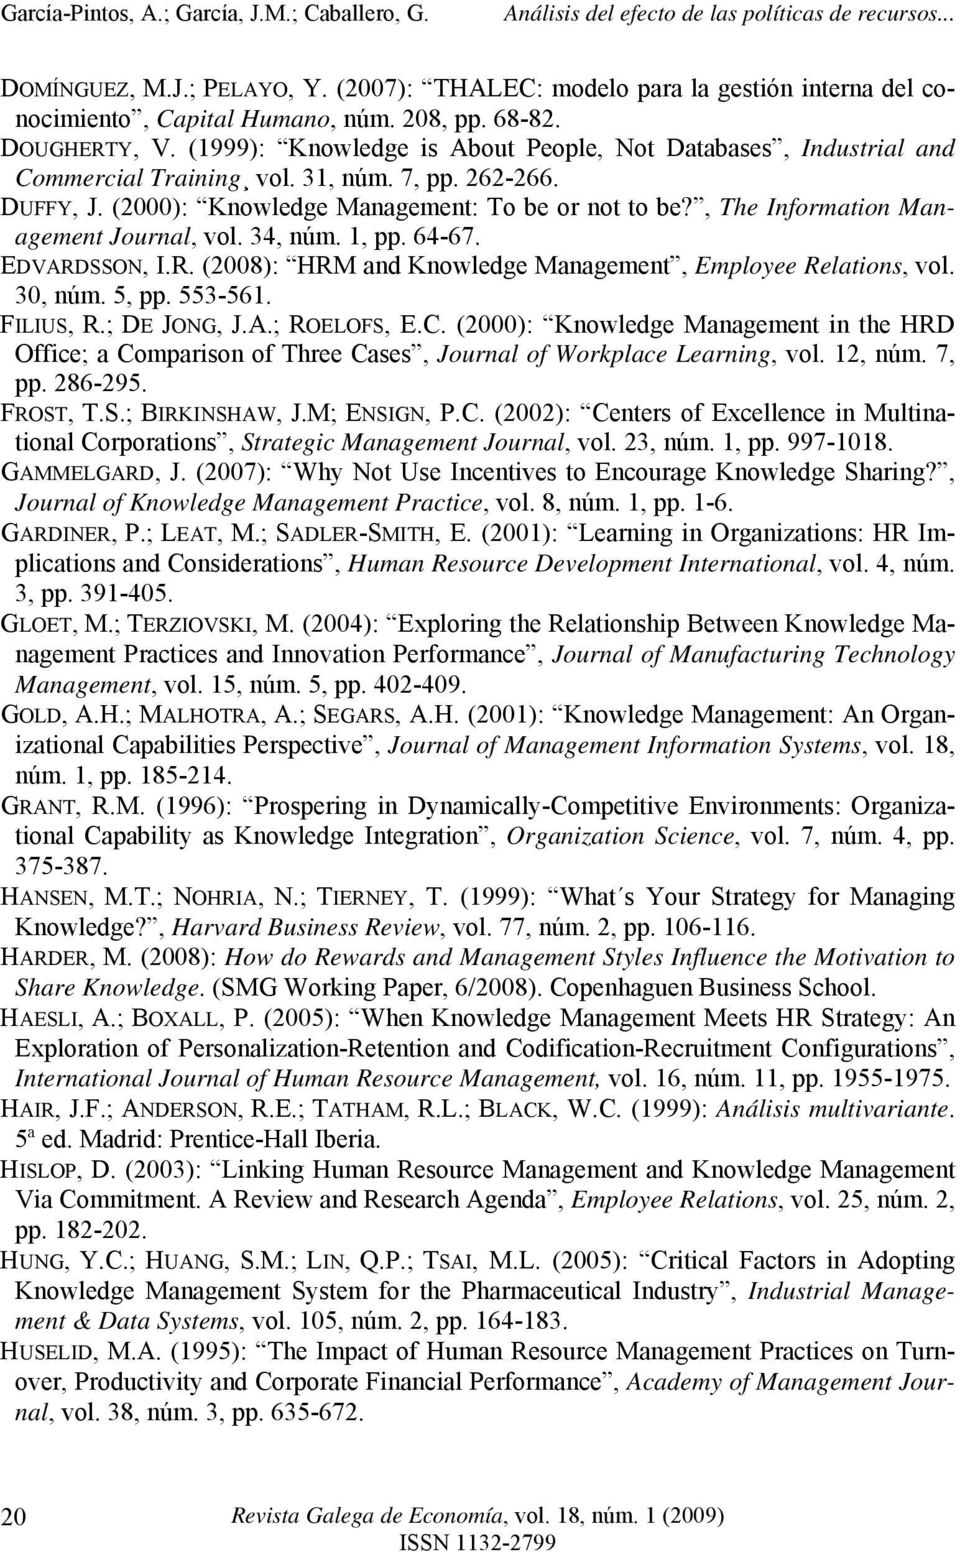 , The Information Management Journal, vol. 34, núm. 1, pp. 64-67. EDVARDSSON, I.R. (2008): HRM and Knowledge Management, Employee Relations, vol. 30, núm. 5, pp. 553-561. FILIUS, R.; DE JONG, J.A.; ROELOFS, E.